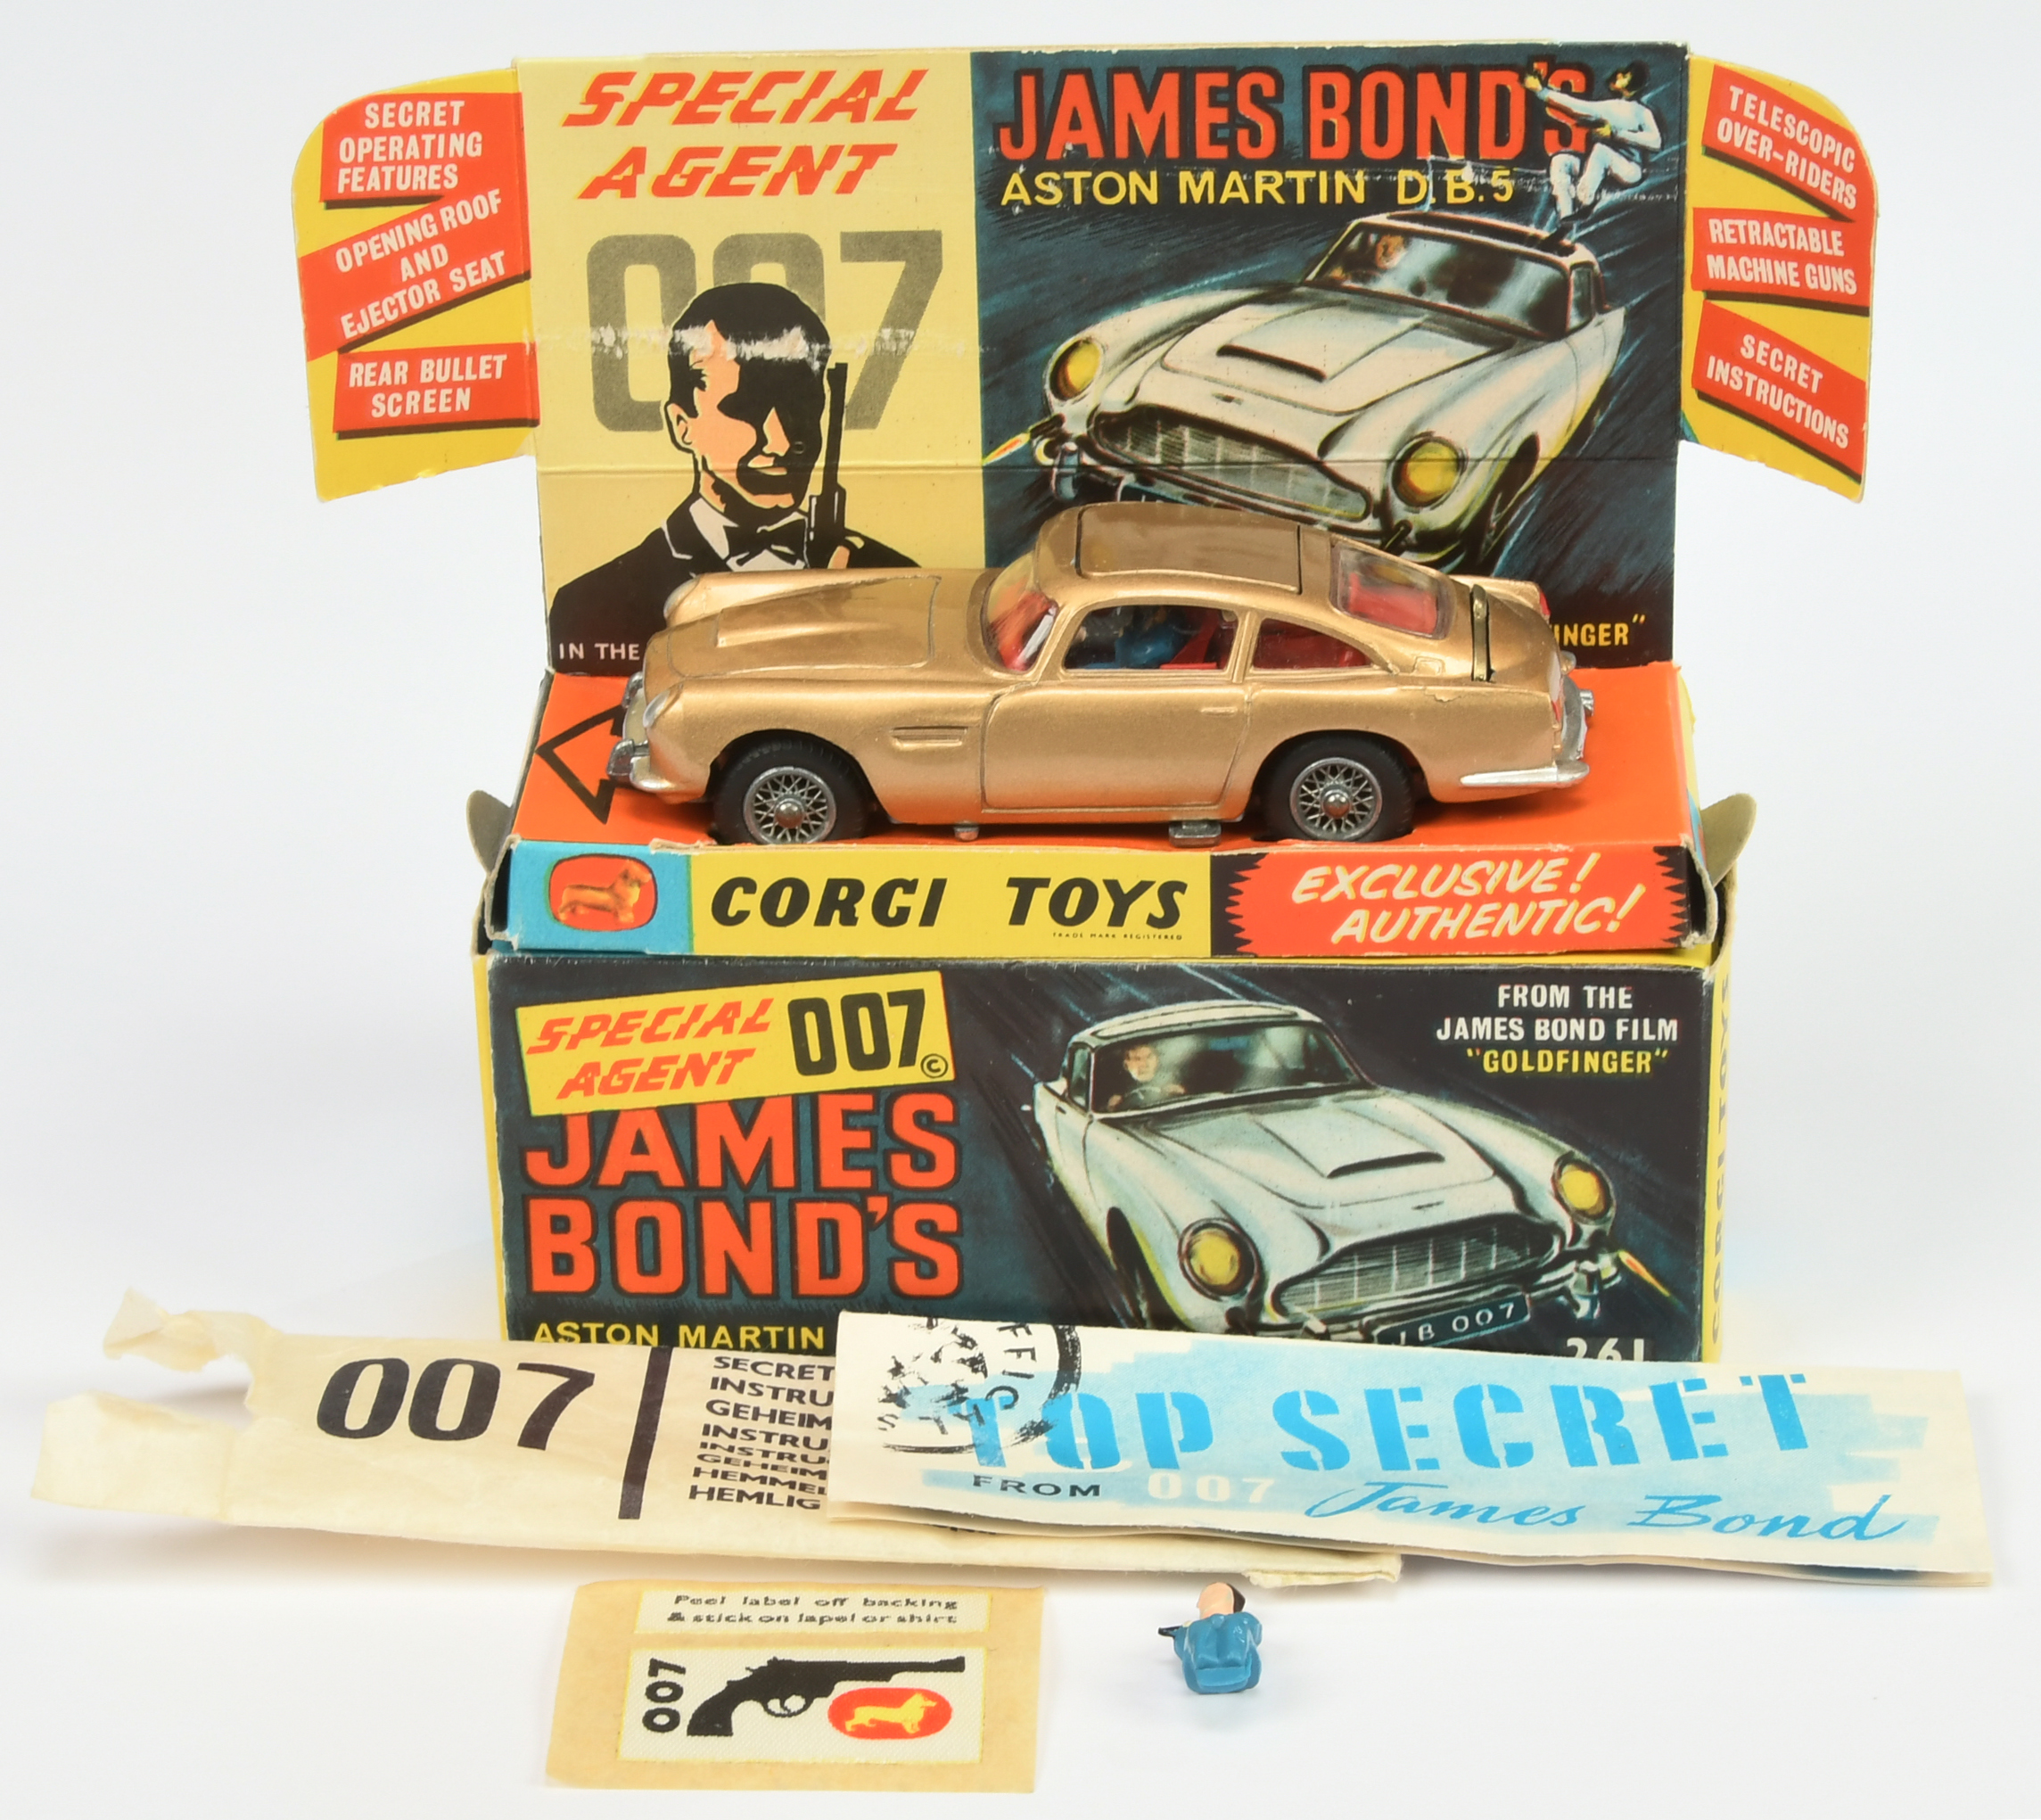 Corgi Toys 261 "James Bond" Aston Martin DB5 "Goldfinger" - Gold body, red interior with "James B...